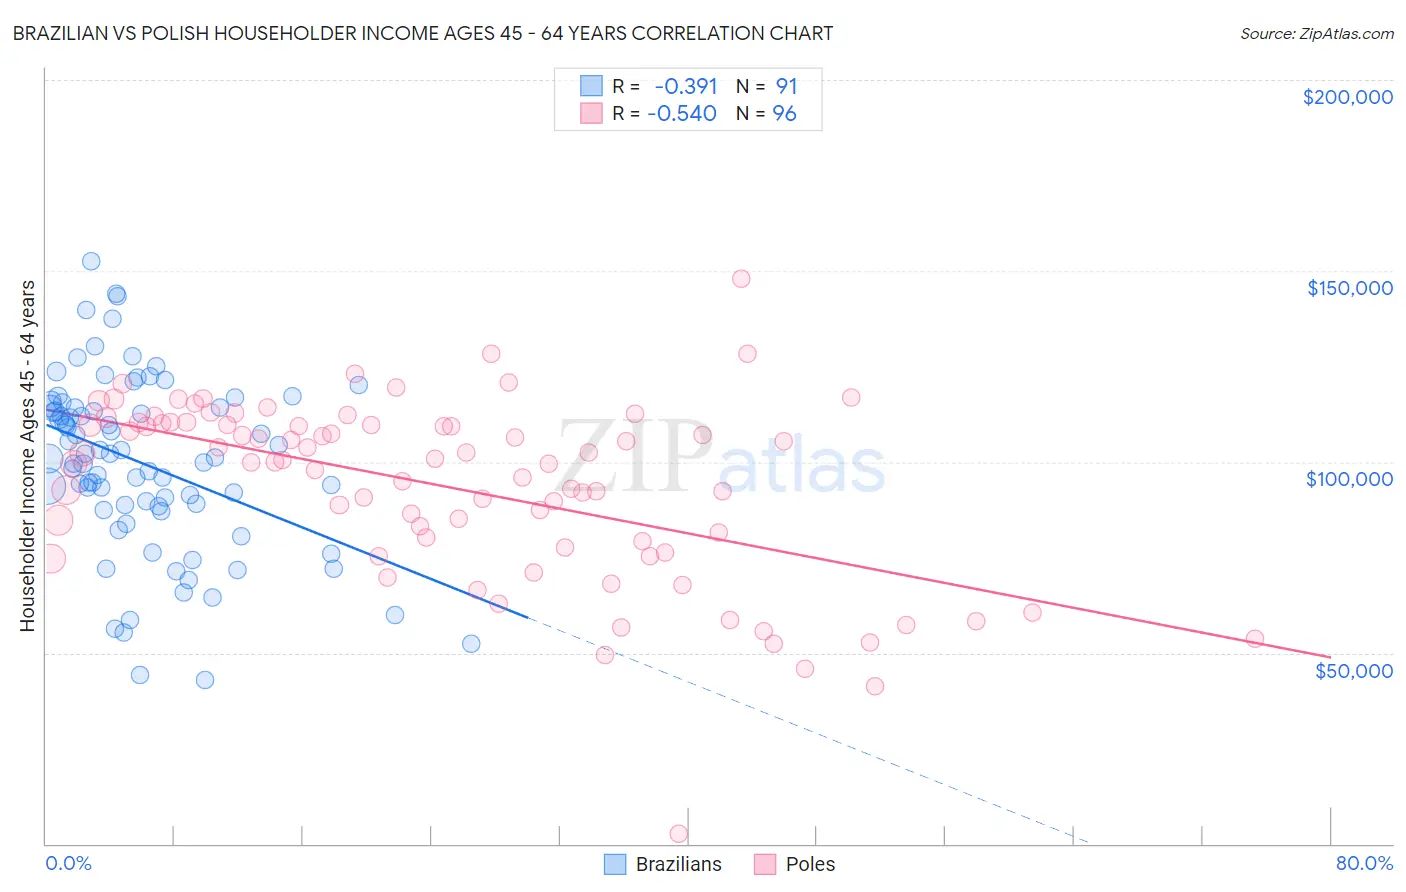 Brazilian vs Polish Householder Income Ages 45 - 64 years